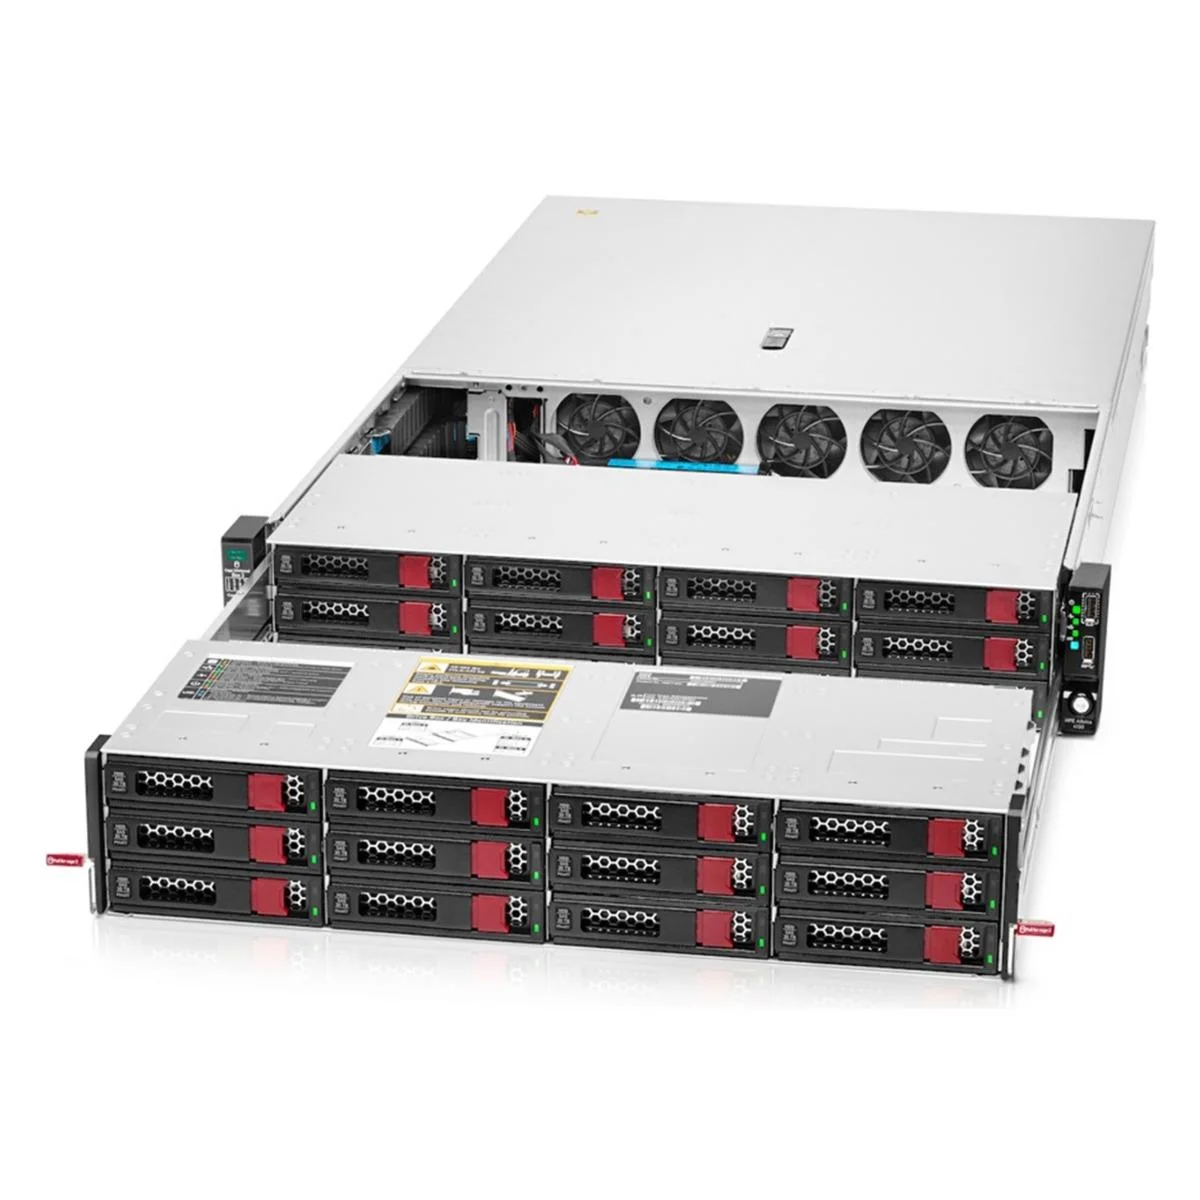 HPE Apollo 4200 Gen9 2U Rack Server